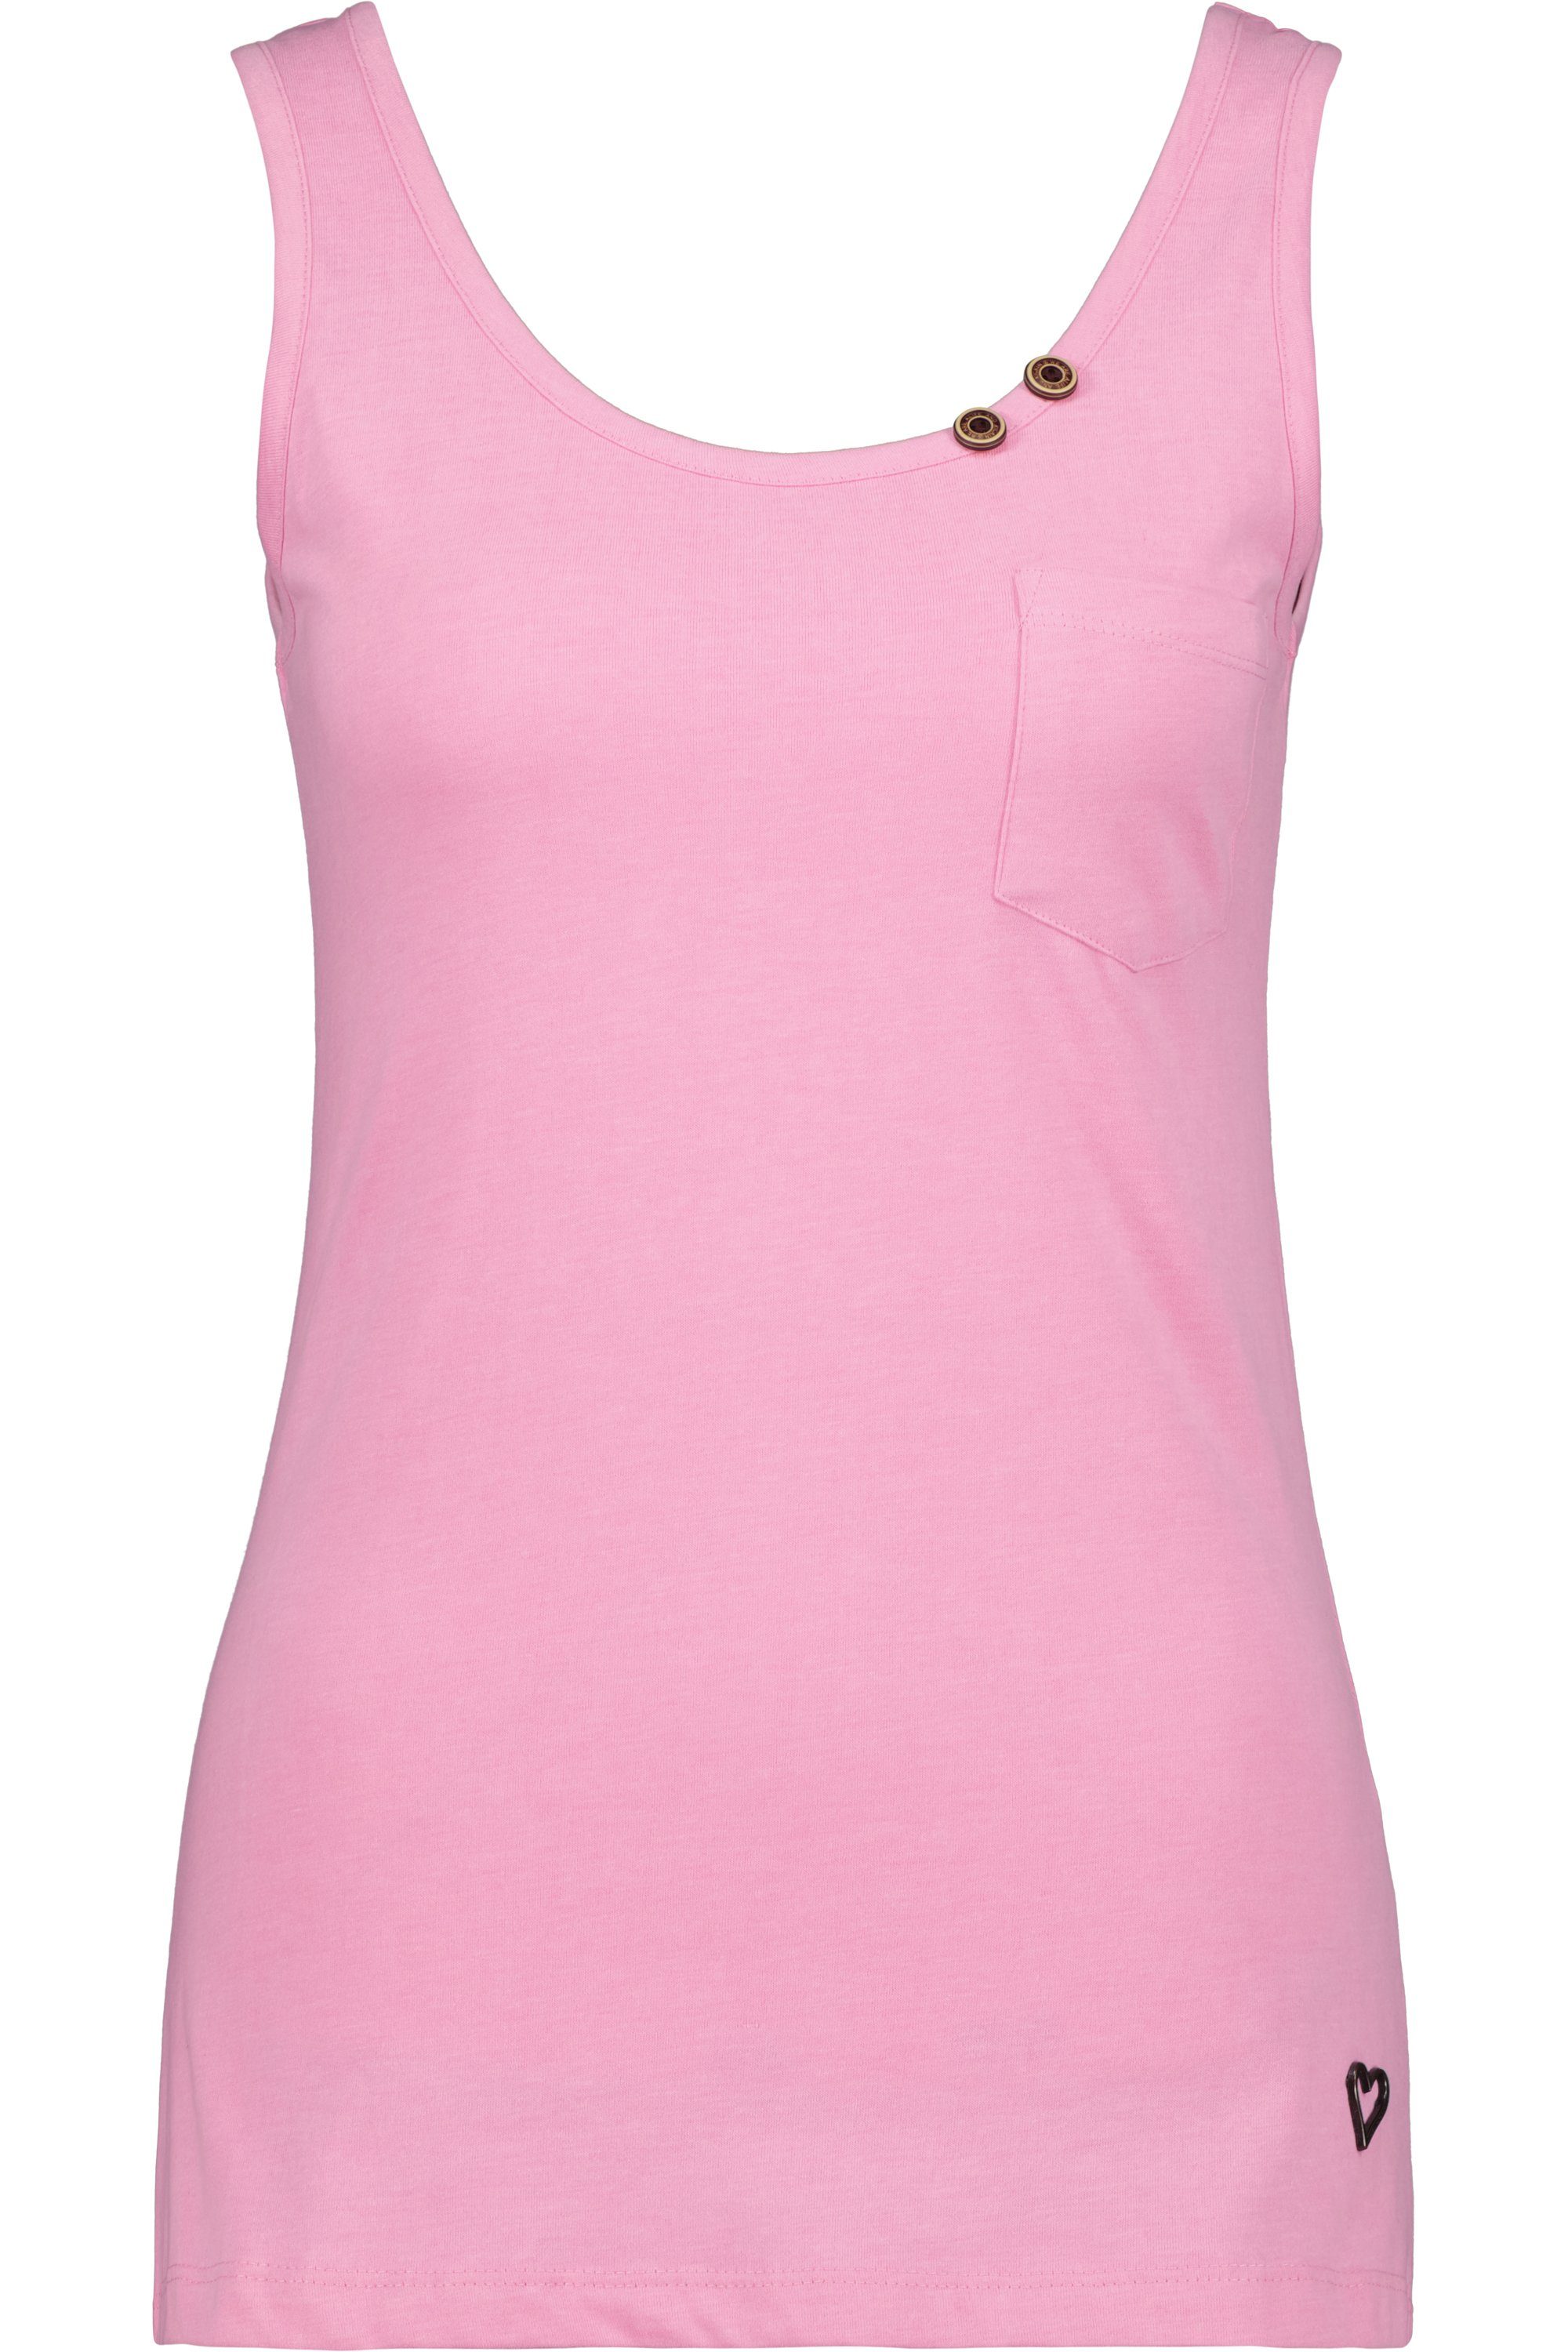 bubblegum JennyAK Shirt T-Shirt Top A Kickin melange & Tanktop, Alife Damen